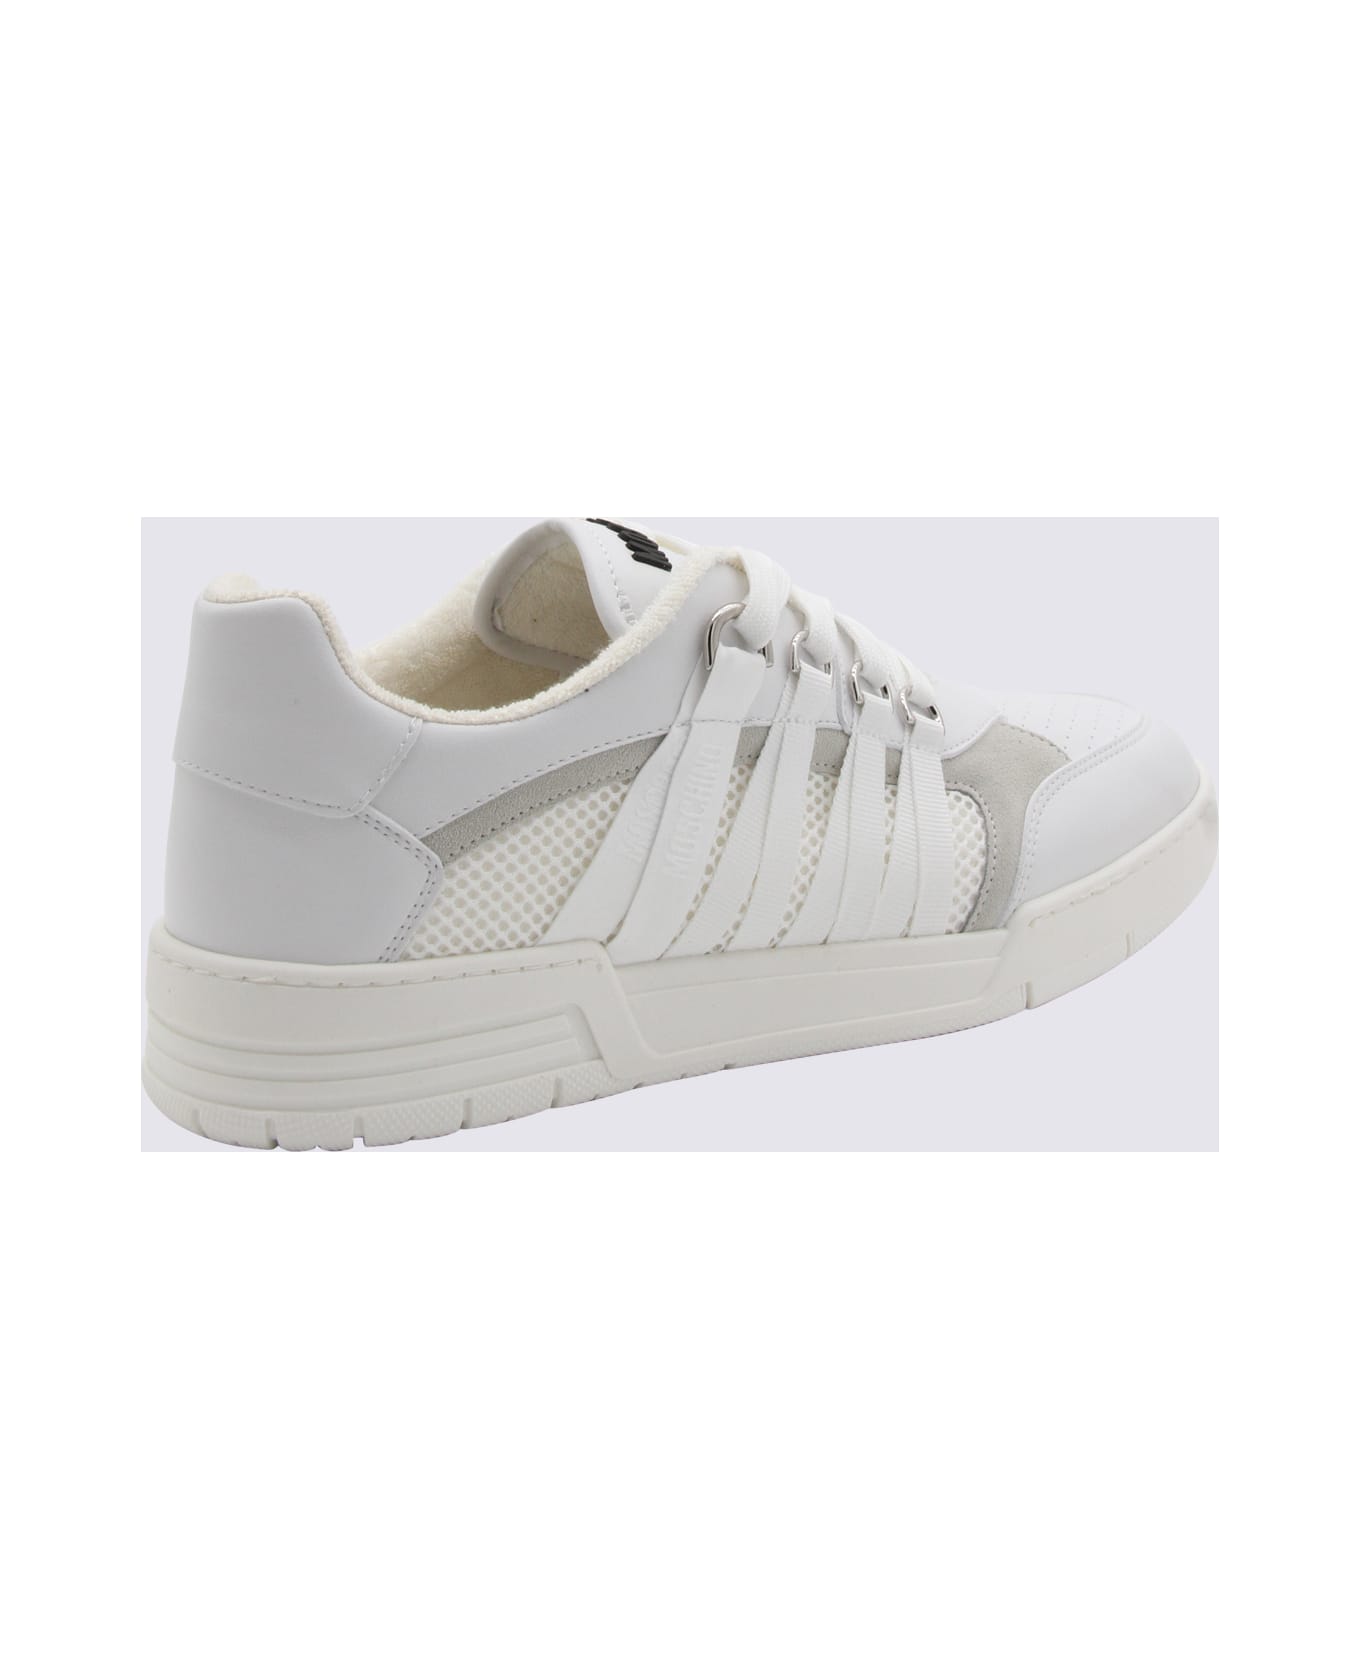 Moschino White Leather Sneakers - White